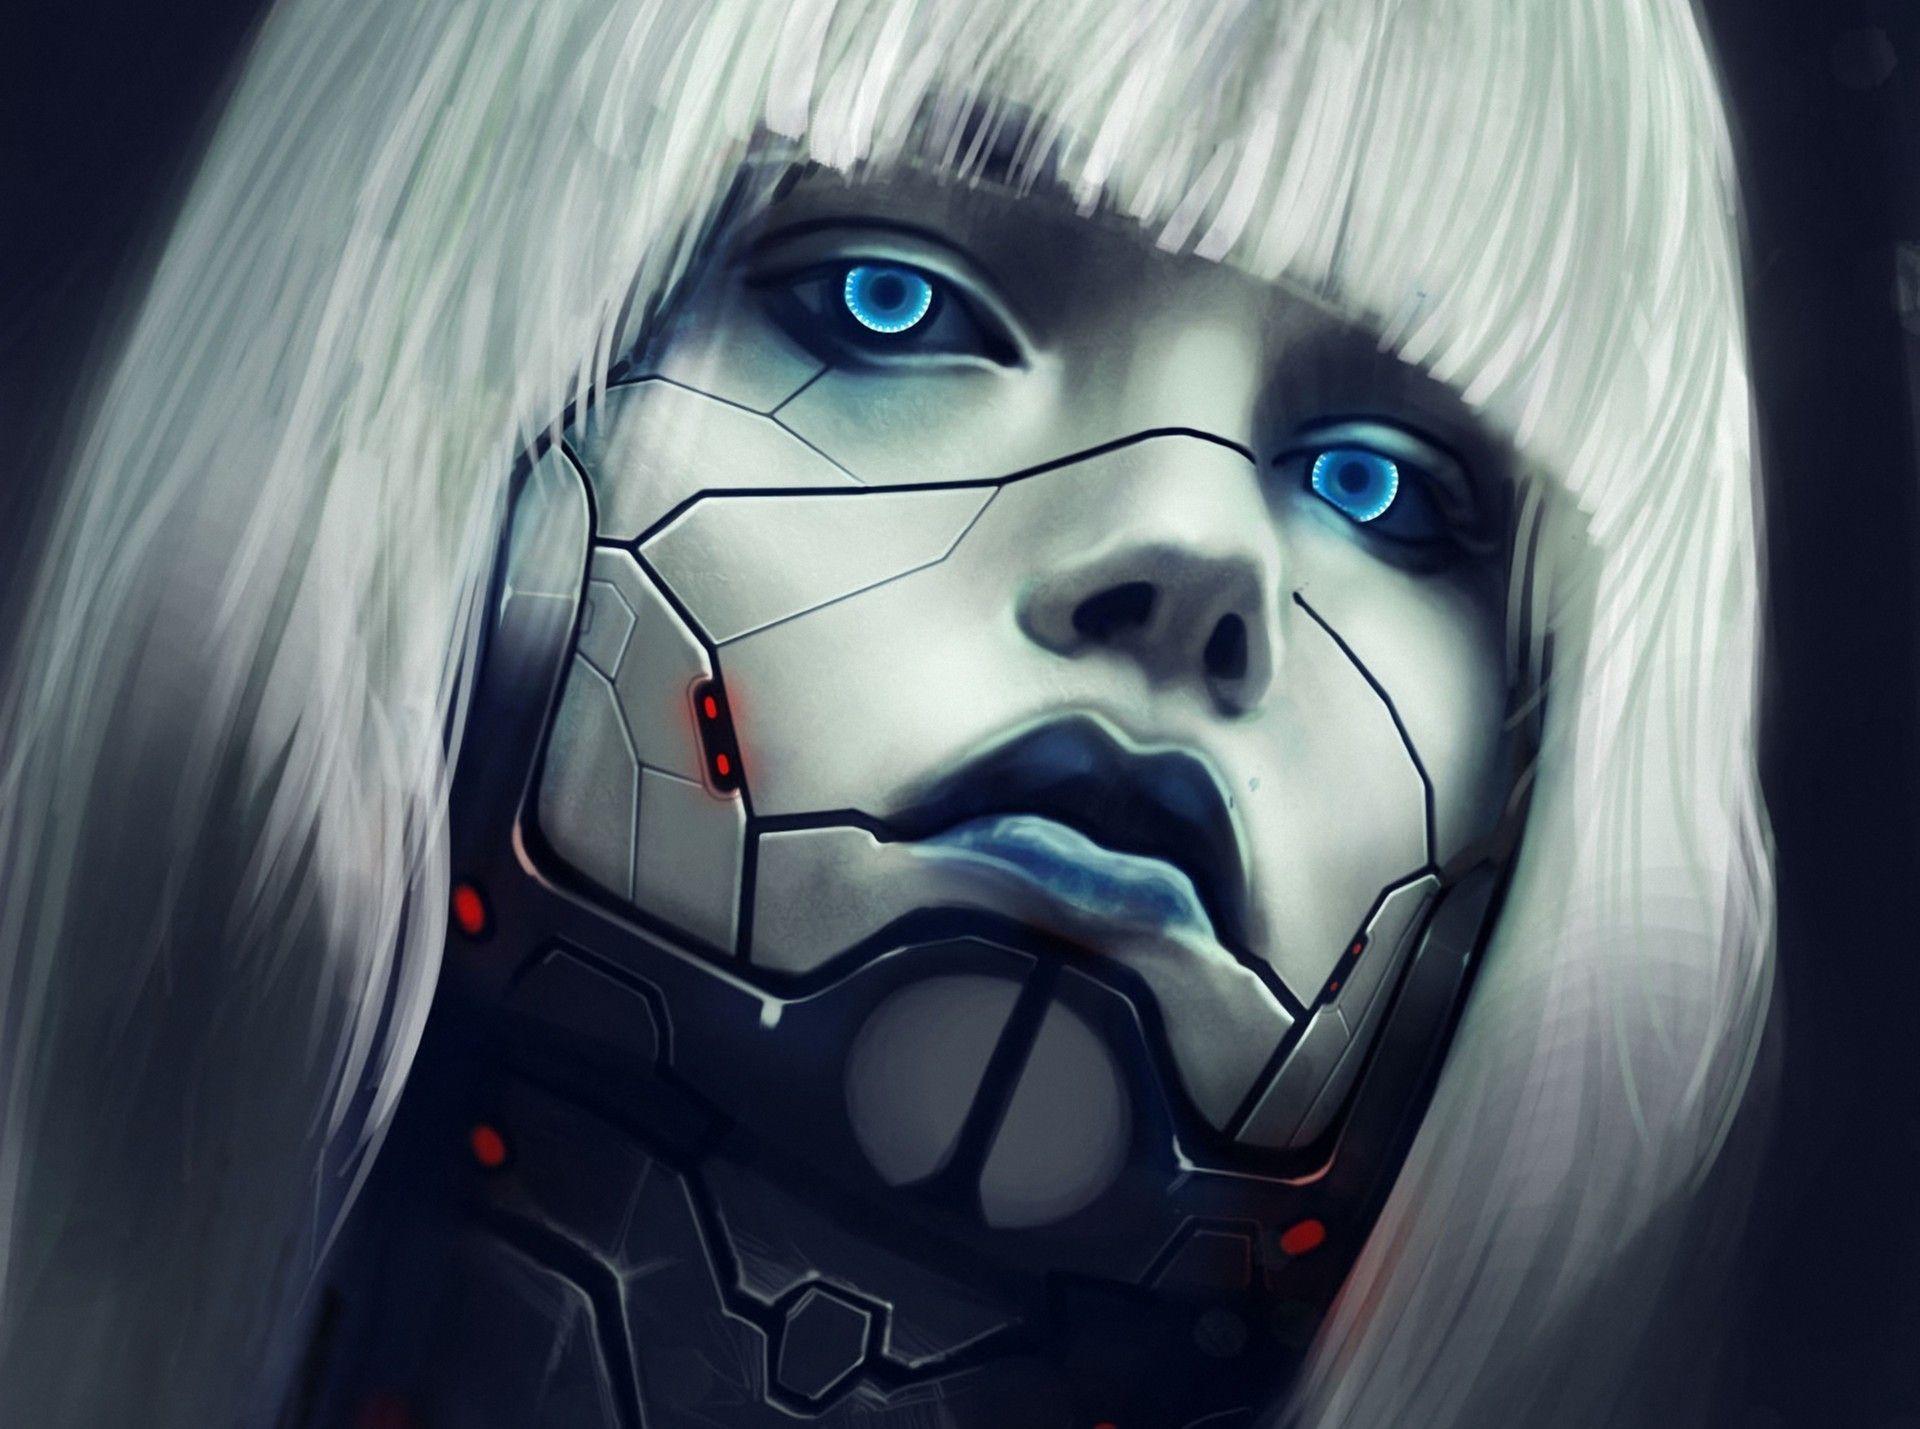 Eyes Robot Face Blonde Girl Hair Sci Fi Cyborg Women Females Face